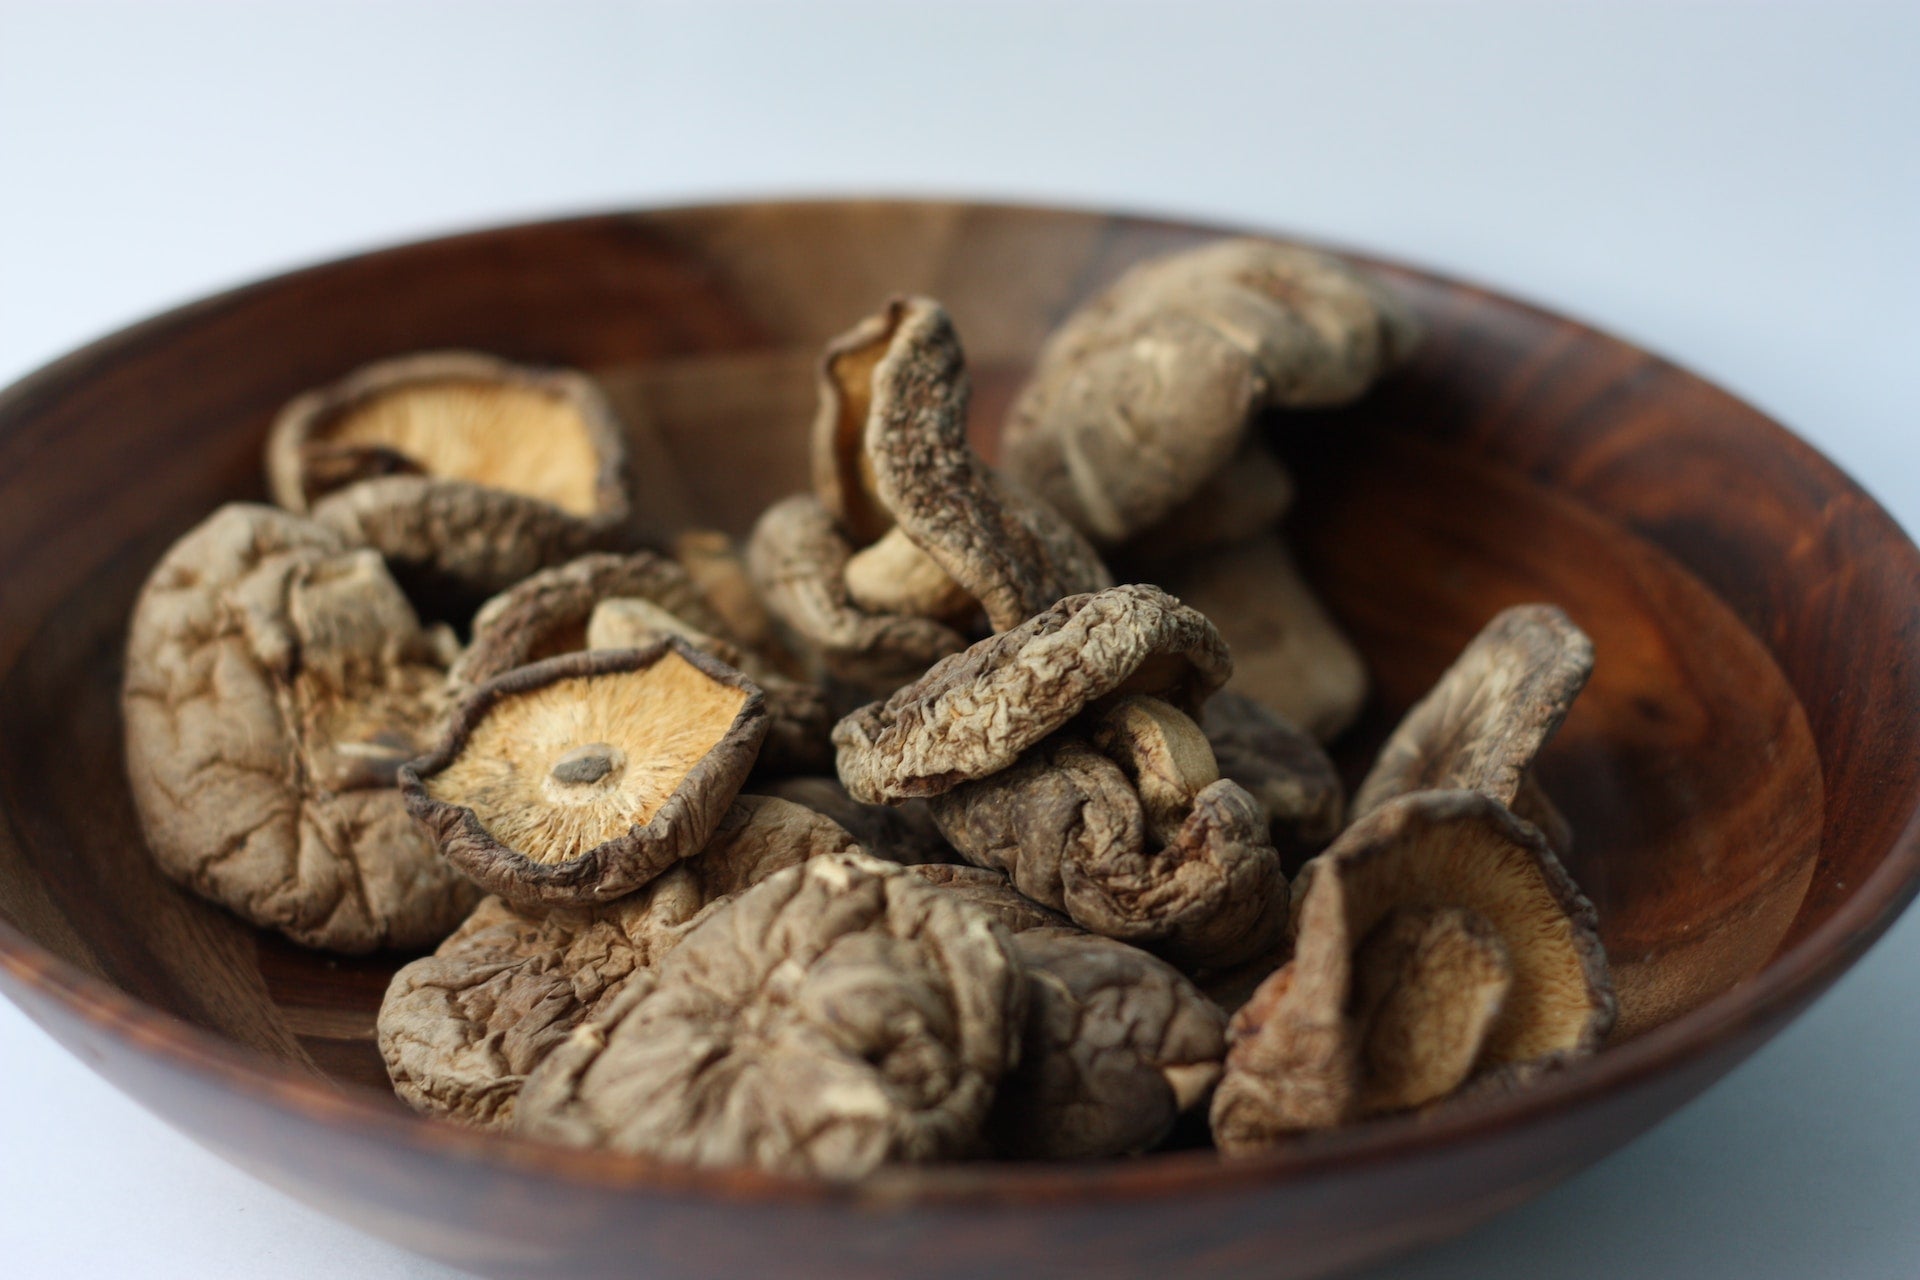 shiitake mushrooms as a superfood